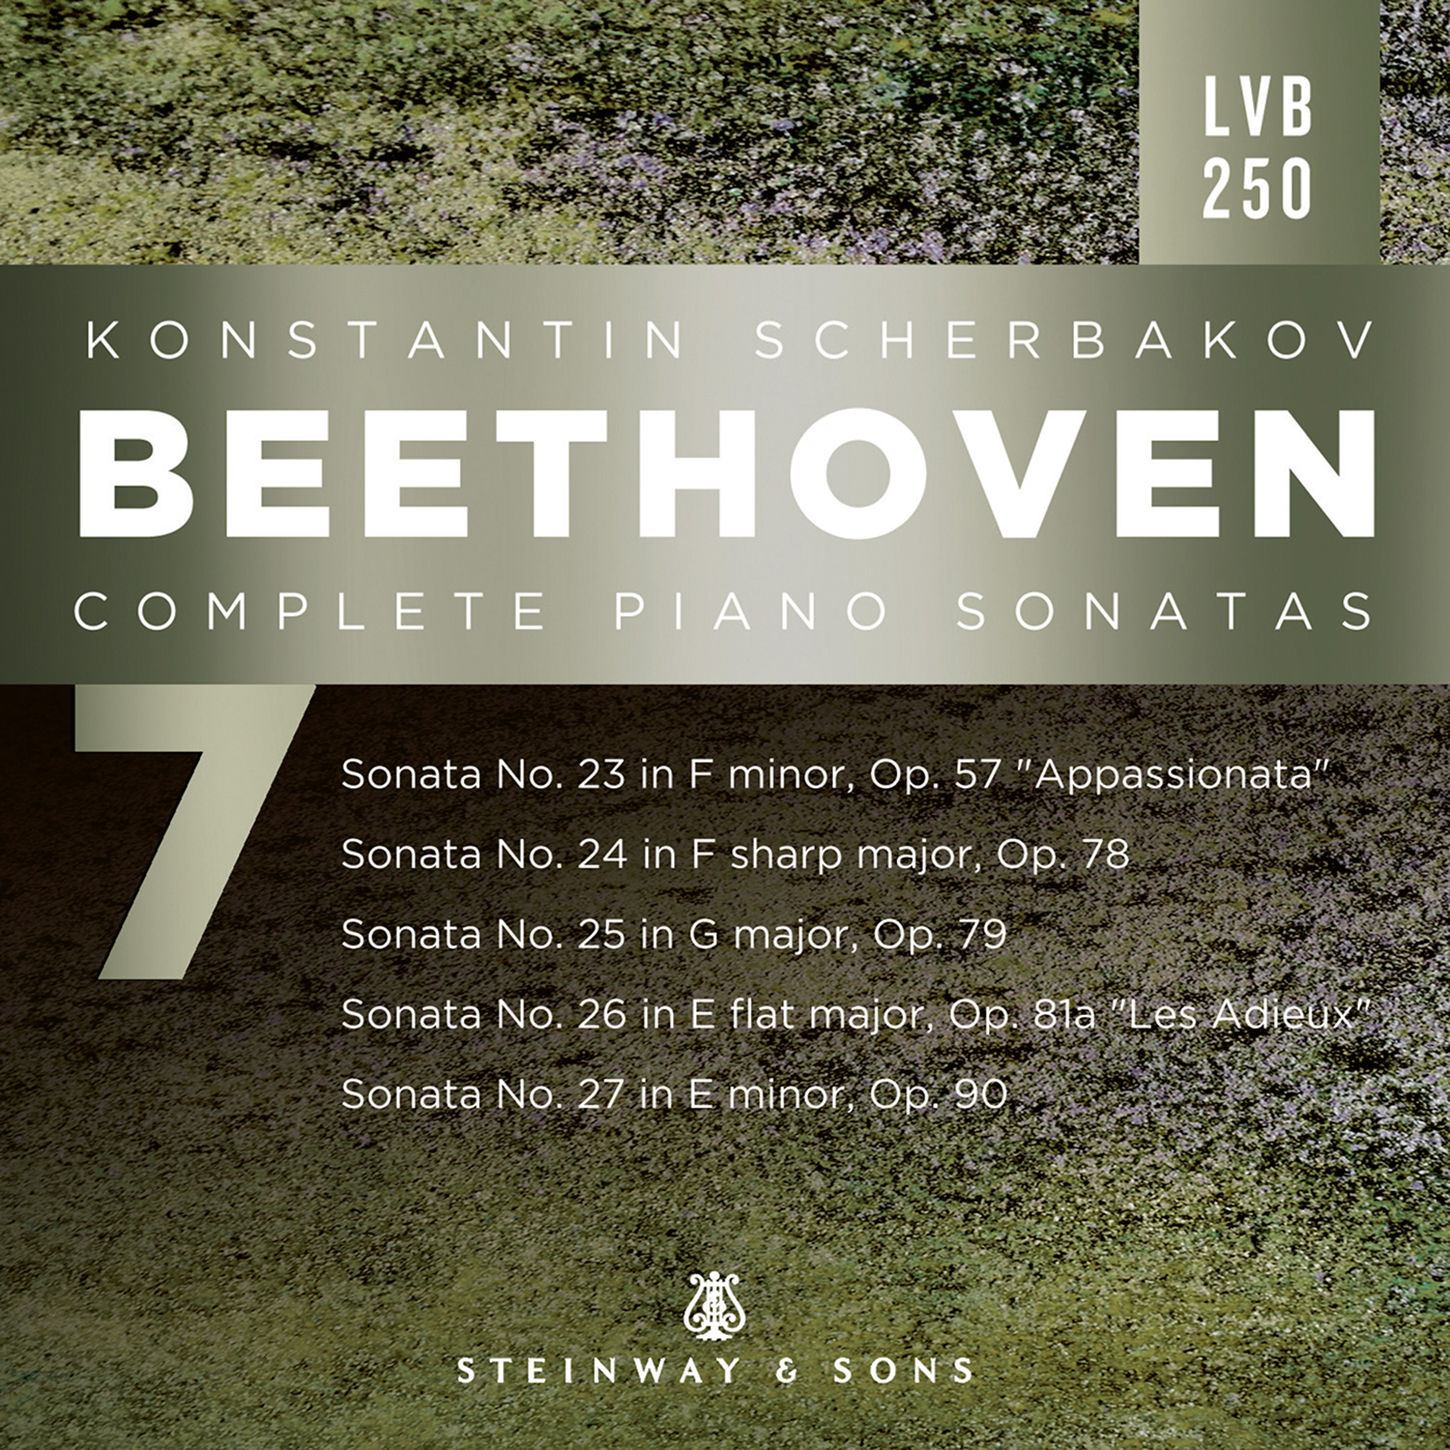 Konstantin Scherbakov - Beethoven Complete Piano Sonatas, Vol. 7 (2020) [FLAC 24bit/96kHz]